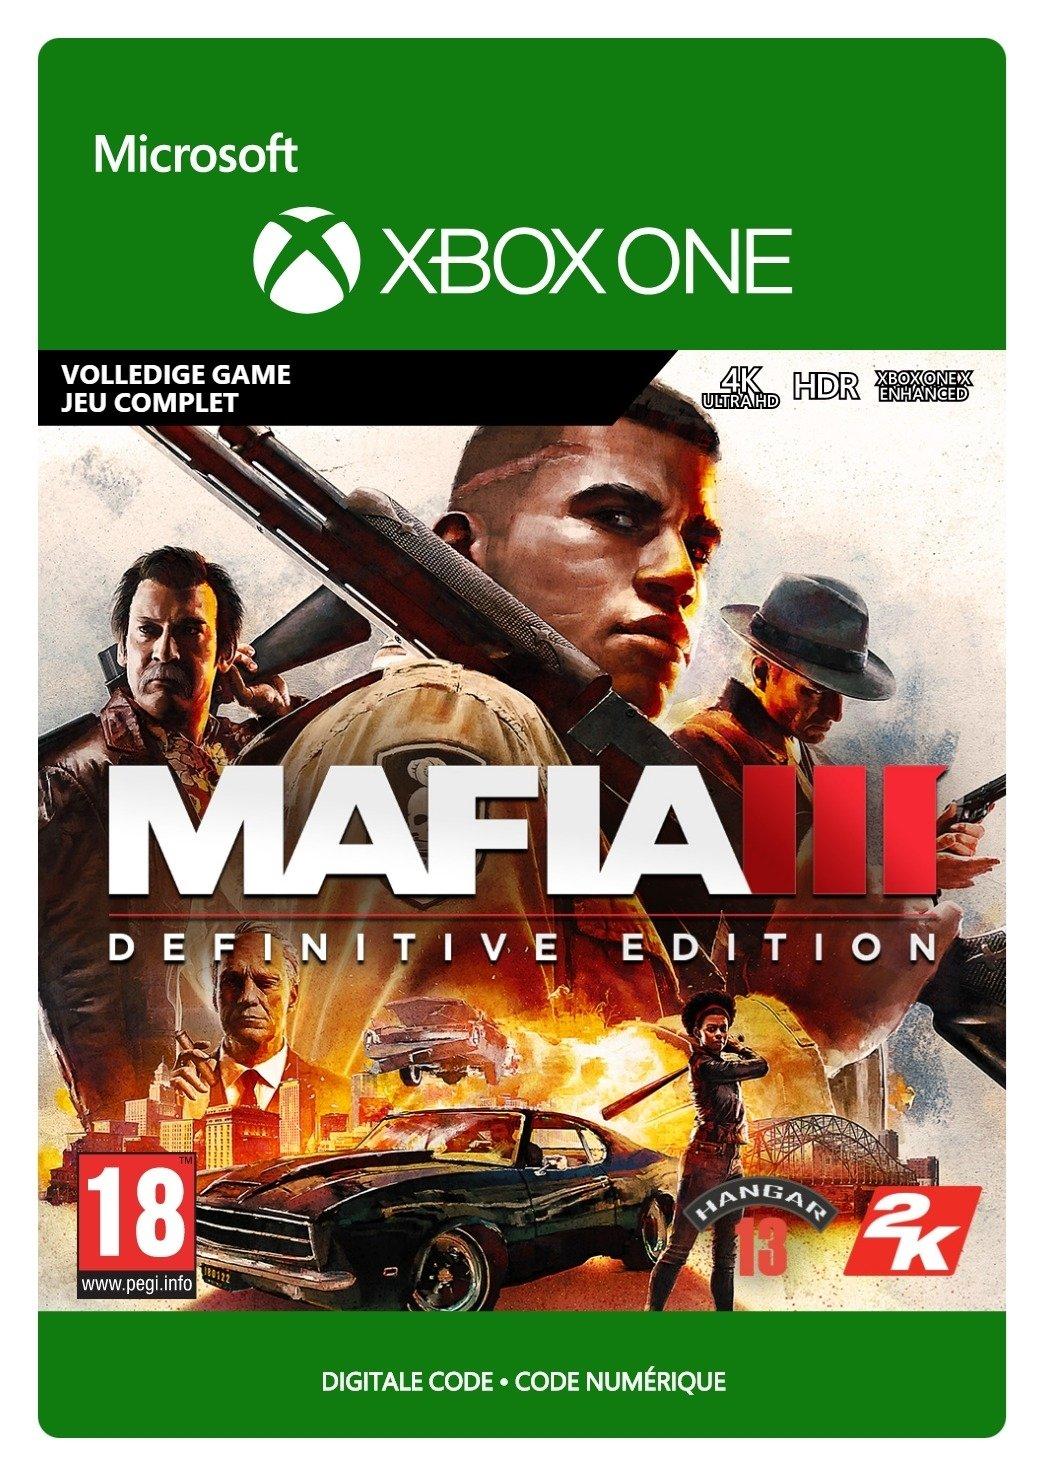 Mafia III: Definitive Edition - Xbox One - Game | G3Q-00955 (98e87532-71ee-dc4d-9b1b-bf8d2178ec18)